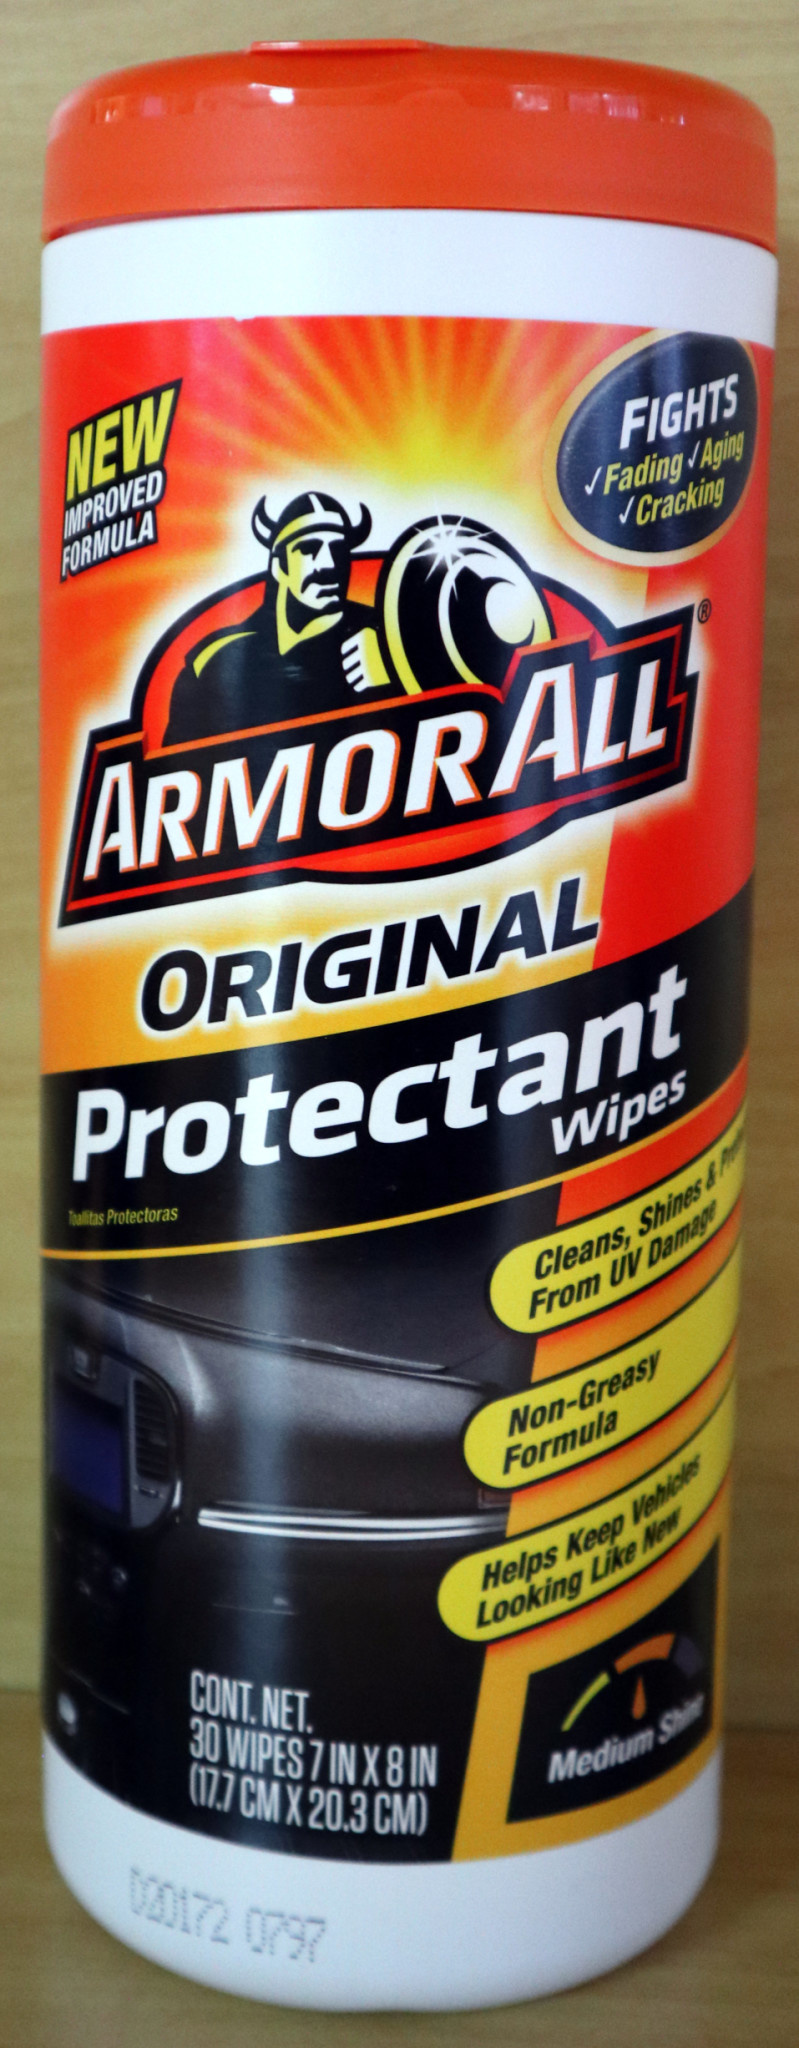 ArmorAll ArmorAll - Original Protectant Wipes